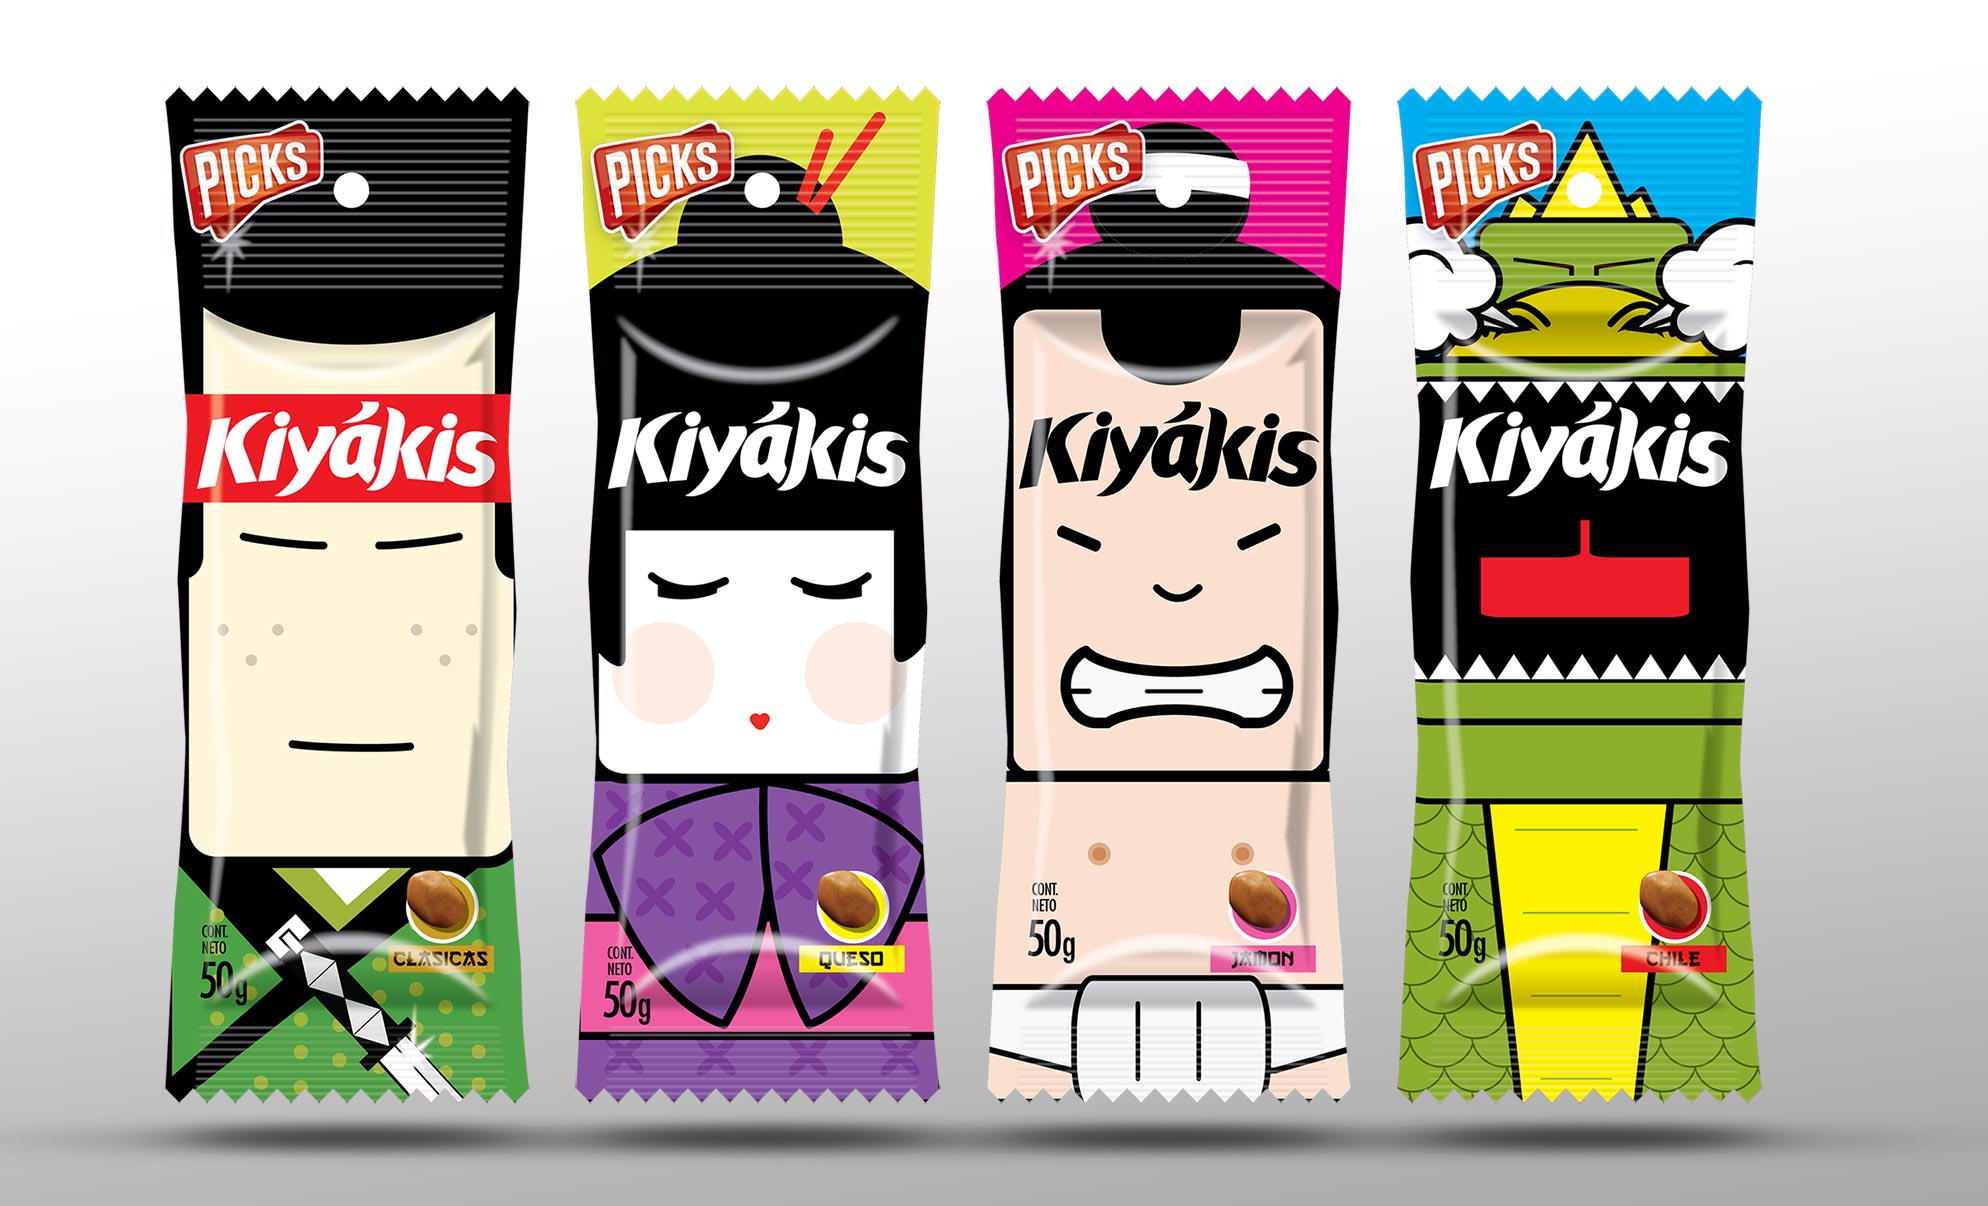 Kiyakis Peanuts Packaging Characters Special Edition